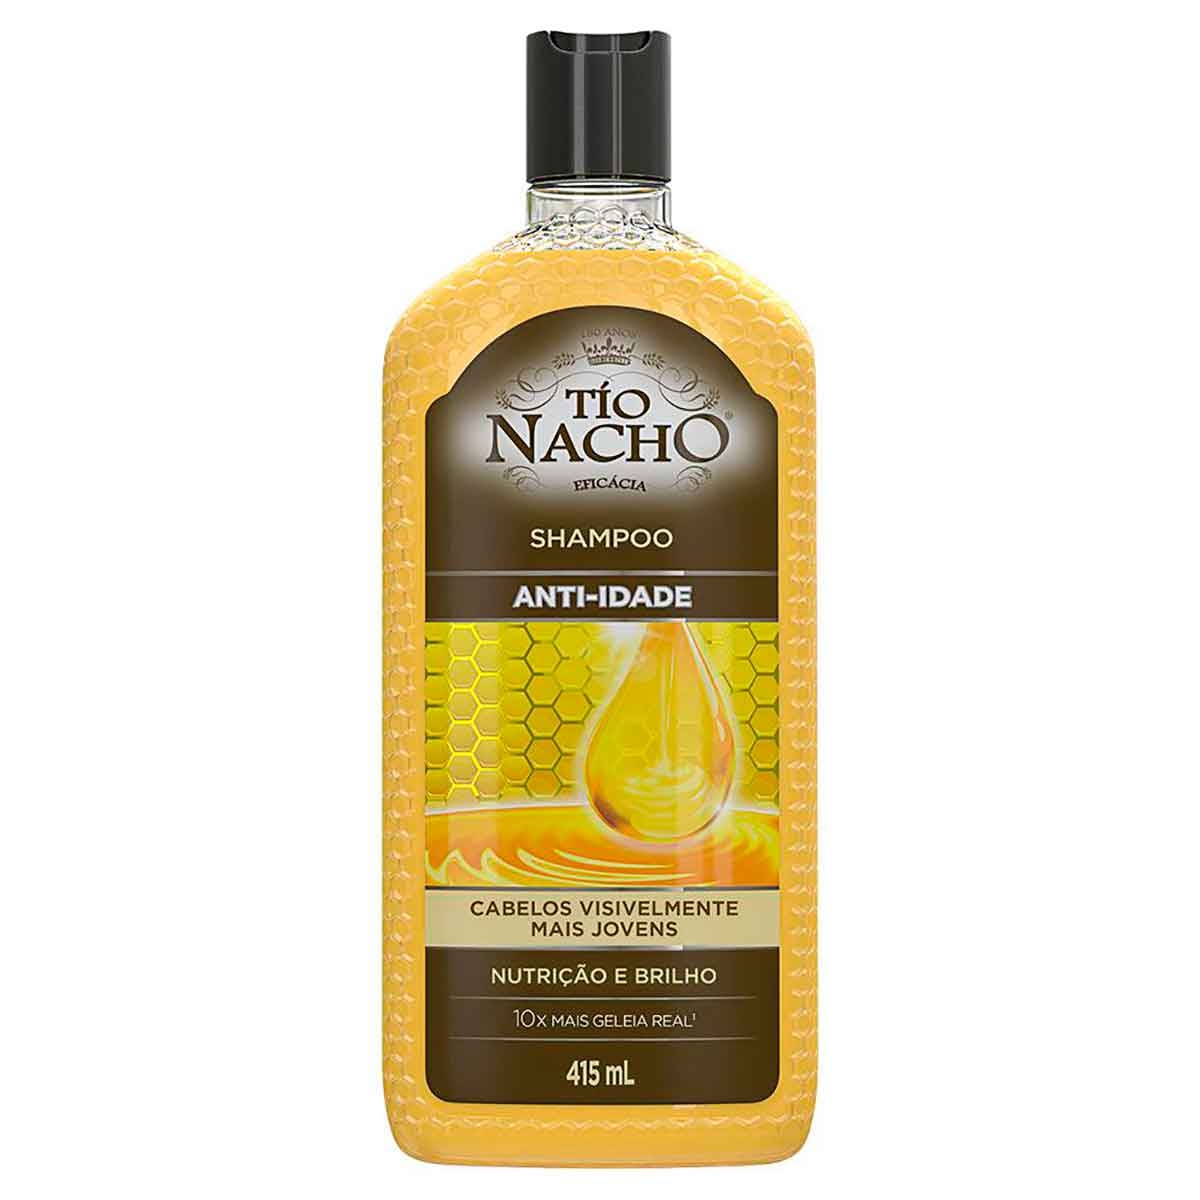 Shampoo Tio Nacho Anti-Idade com 415ml